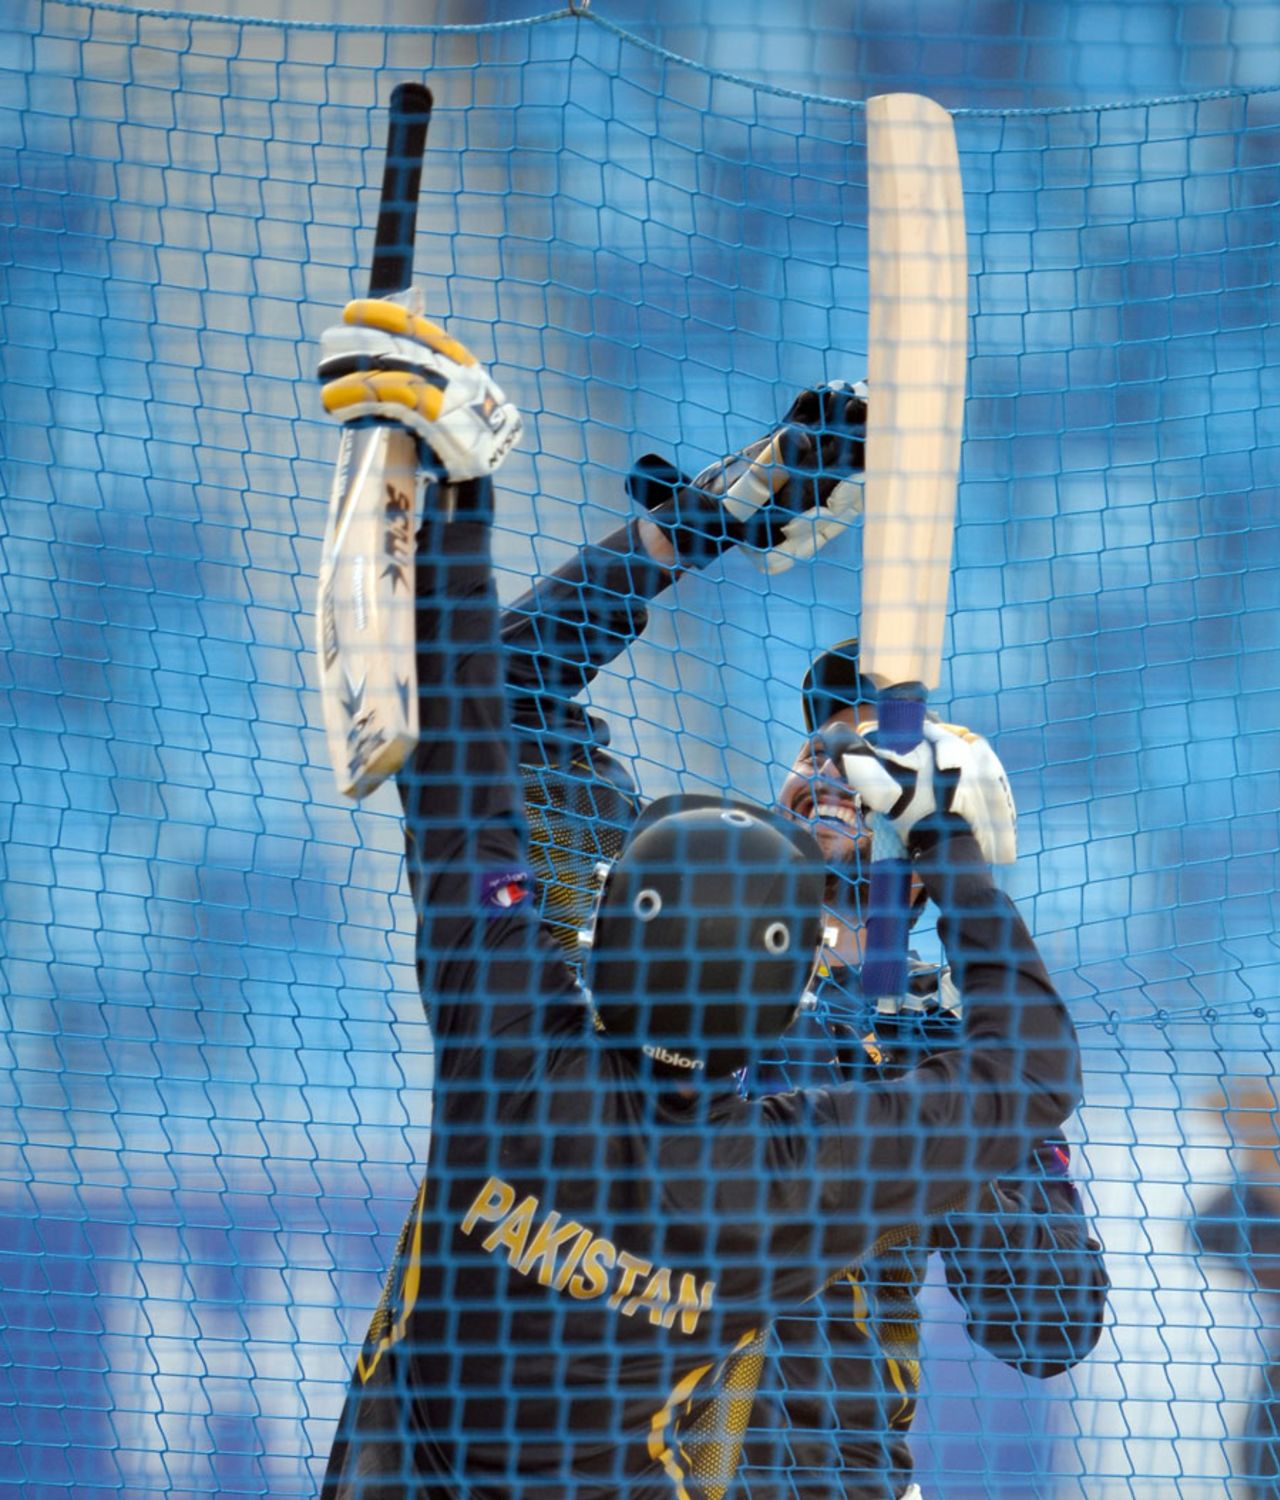 Ahmed Shehzad and Shahid Afridi exchange bats during a nets session, Dubai, November 12, 2013